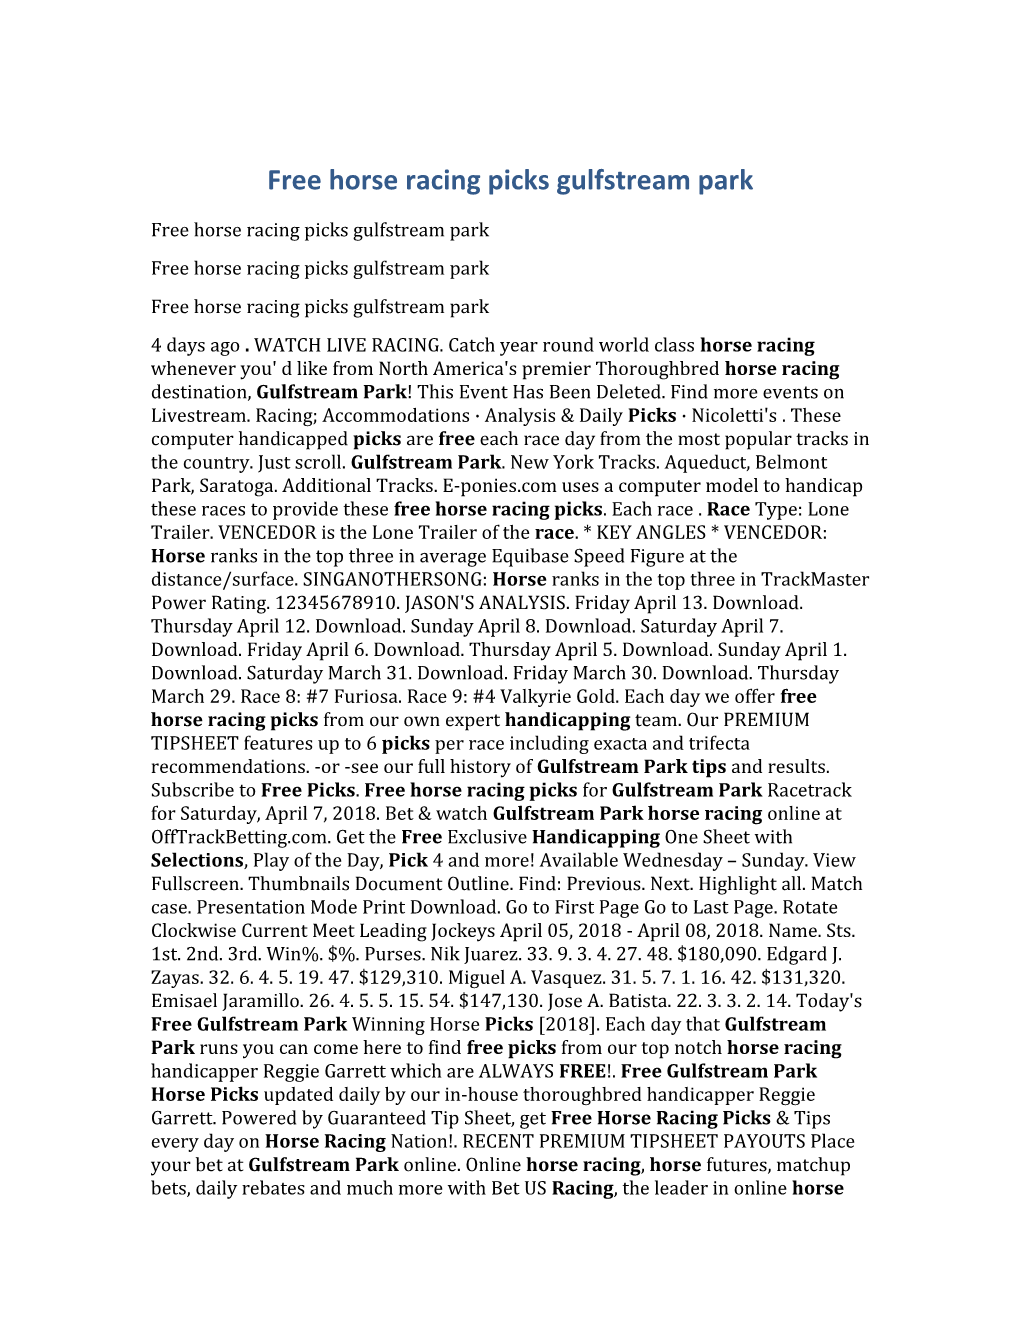 Free Horse Racing Picks Gulfstream Park